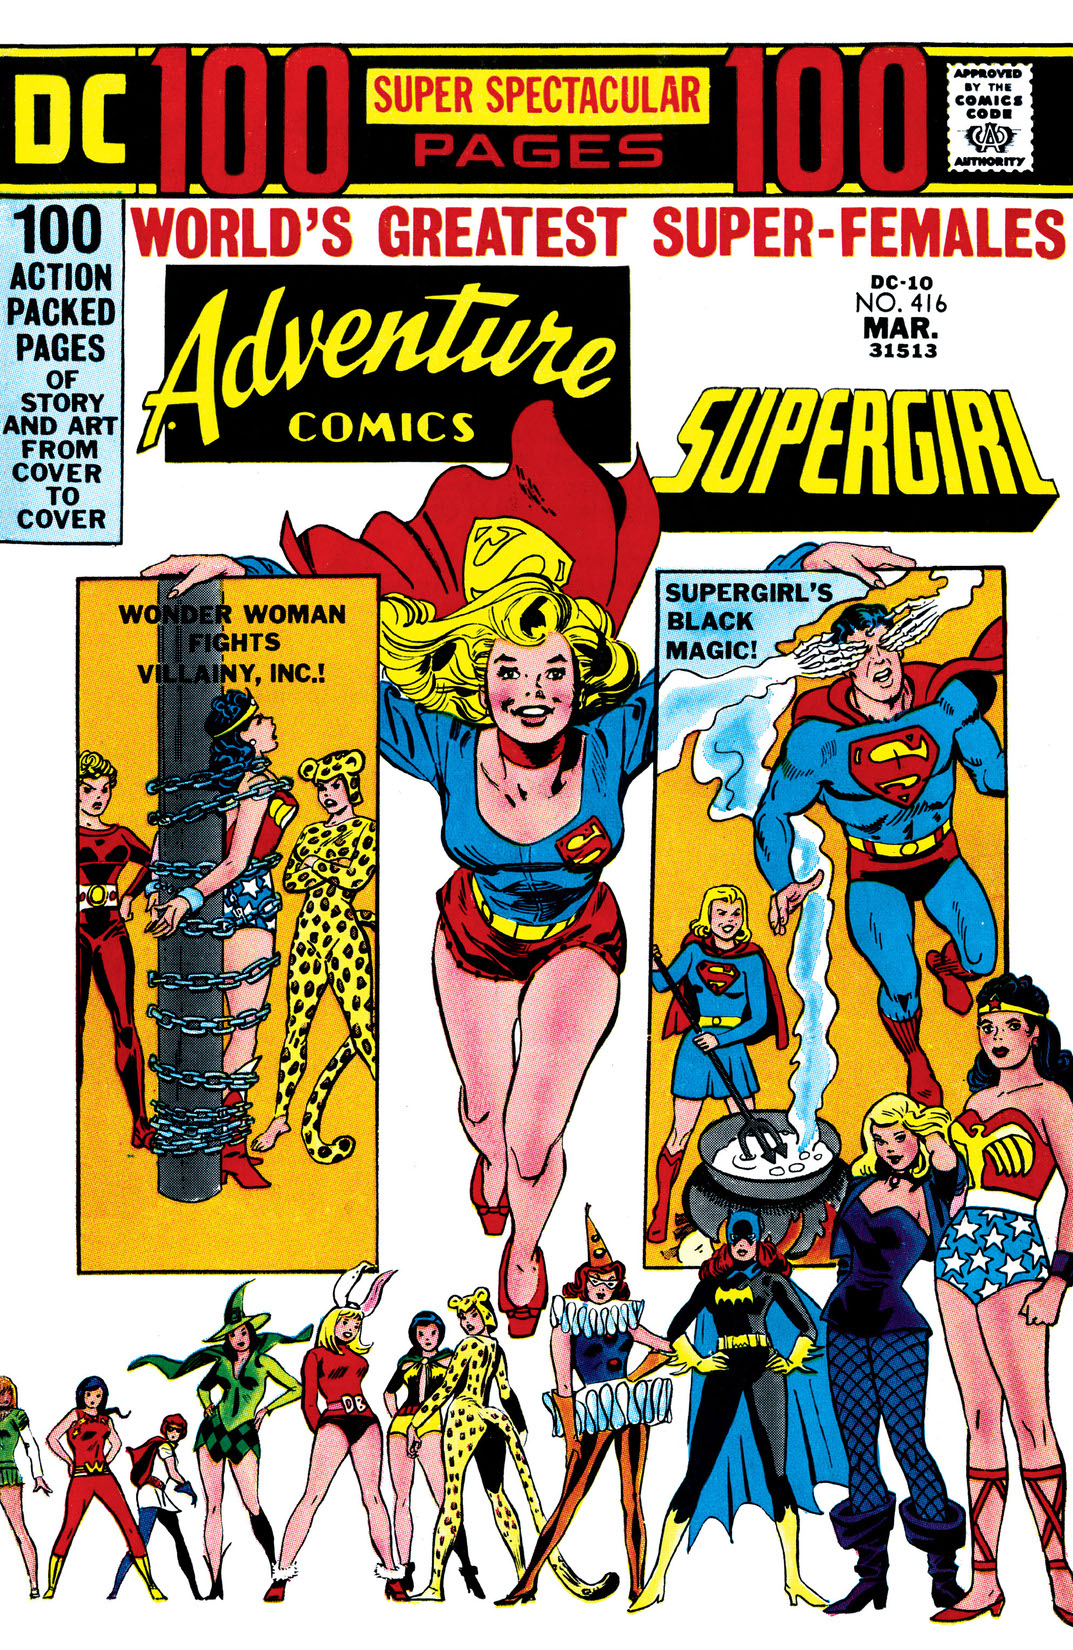 Adventure Comics (1938-) #416 preview images